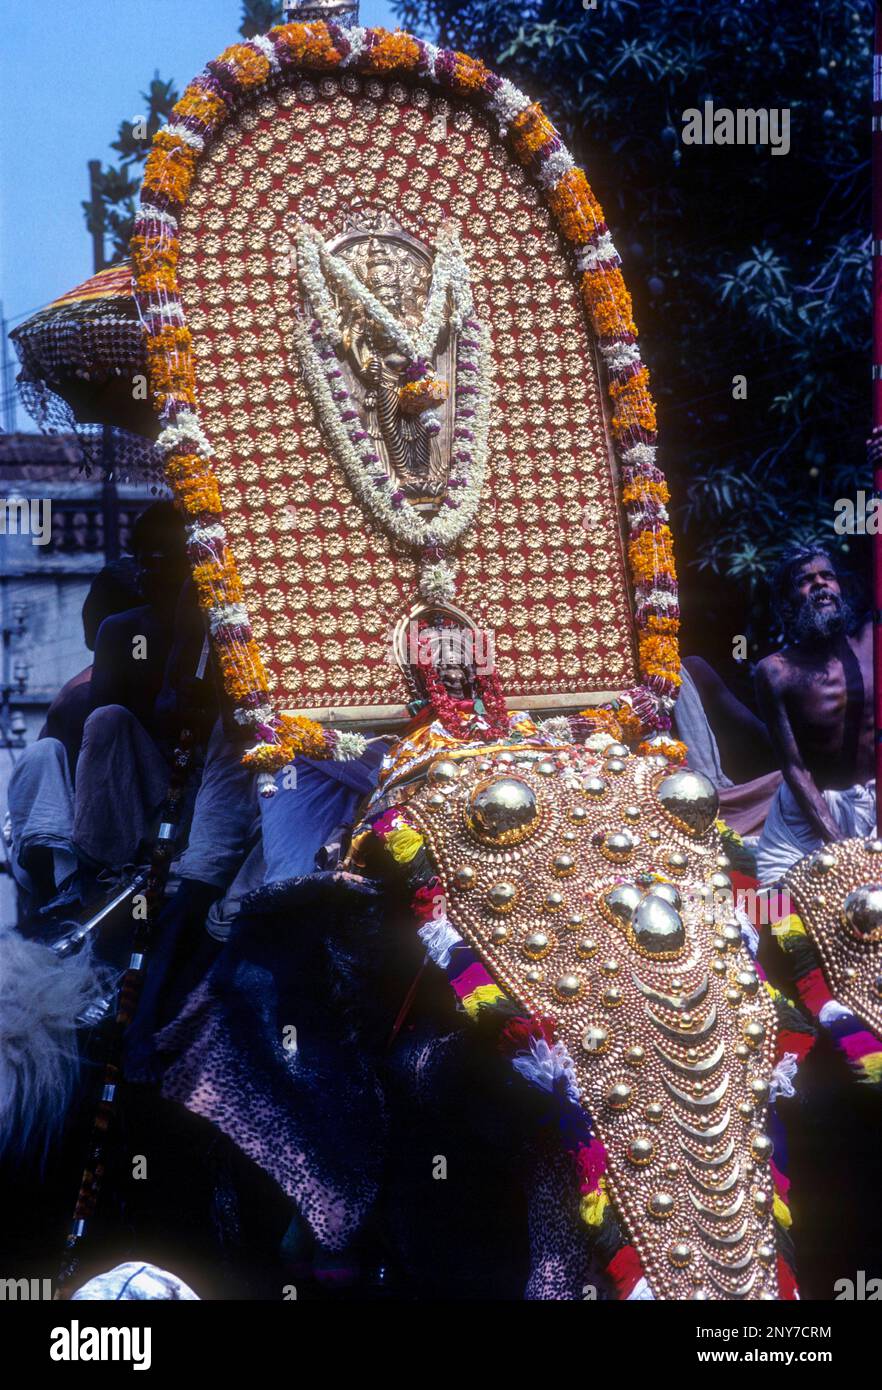 Icon of lord Krishna deity atop Caparisoned elephant in Pooram festival, Thrissur or Trichur, Kerala, India, Asia Stock Photo